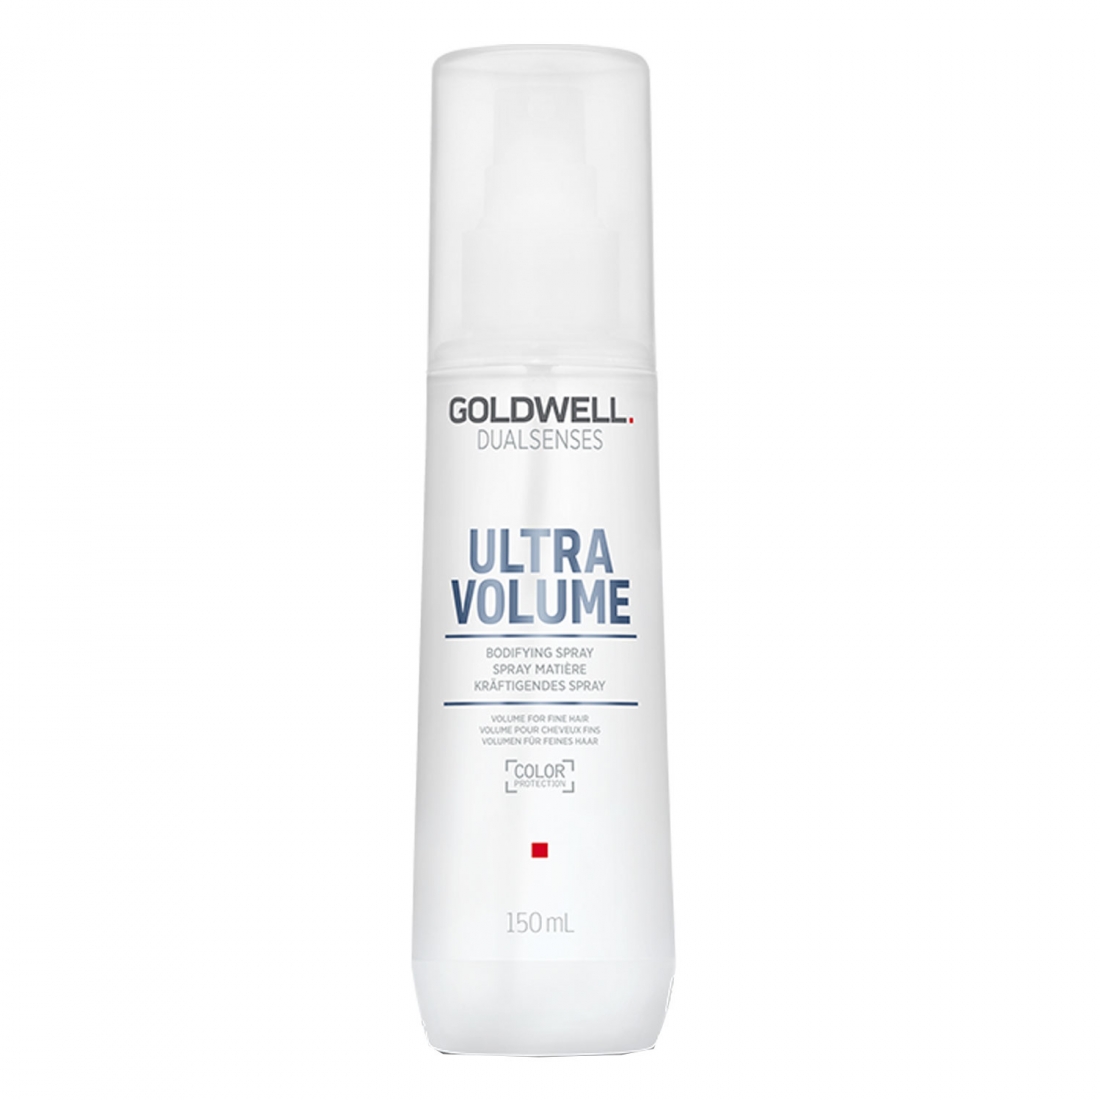 Goldwell - Dualsenses Ultra Volume Bodifying Spray 150ml